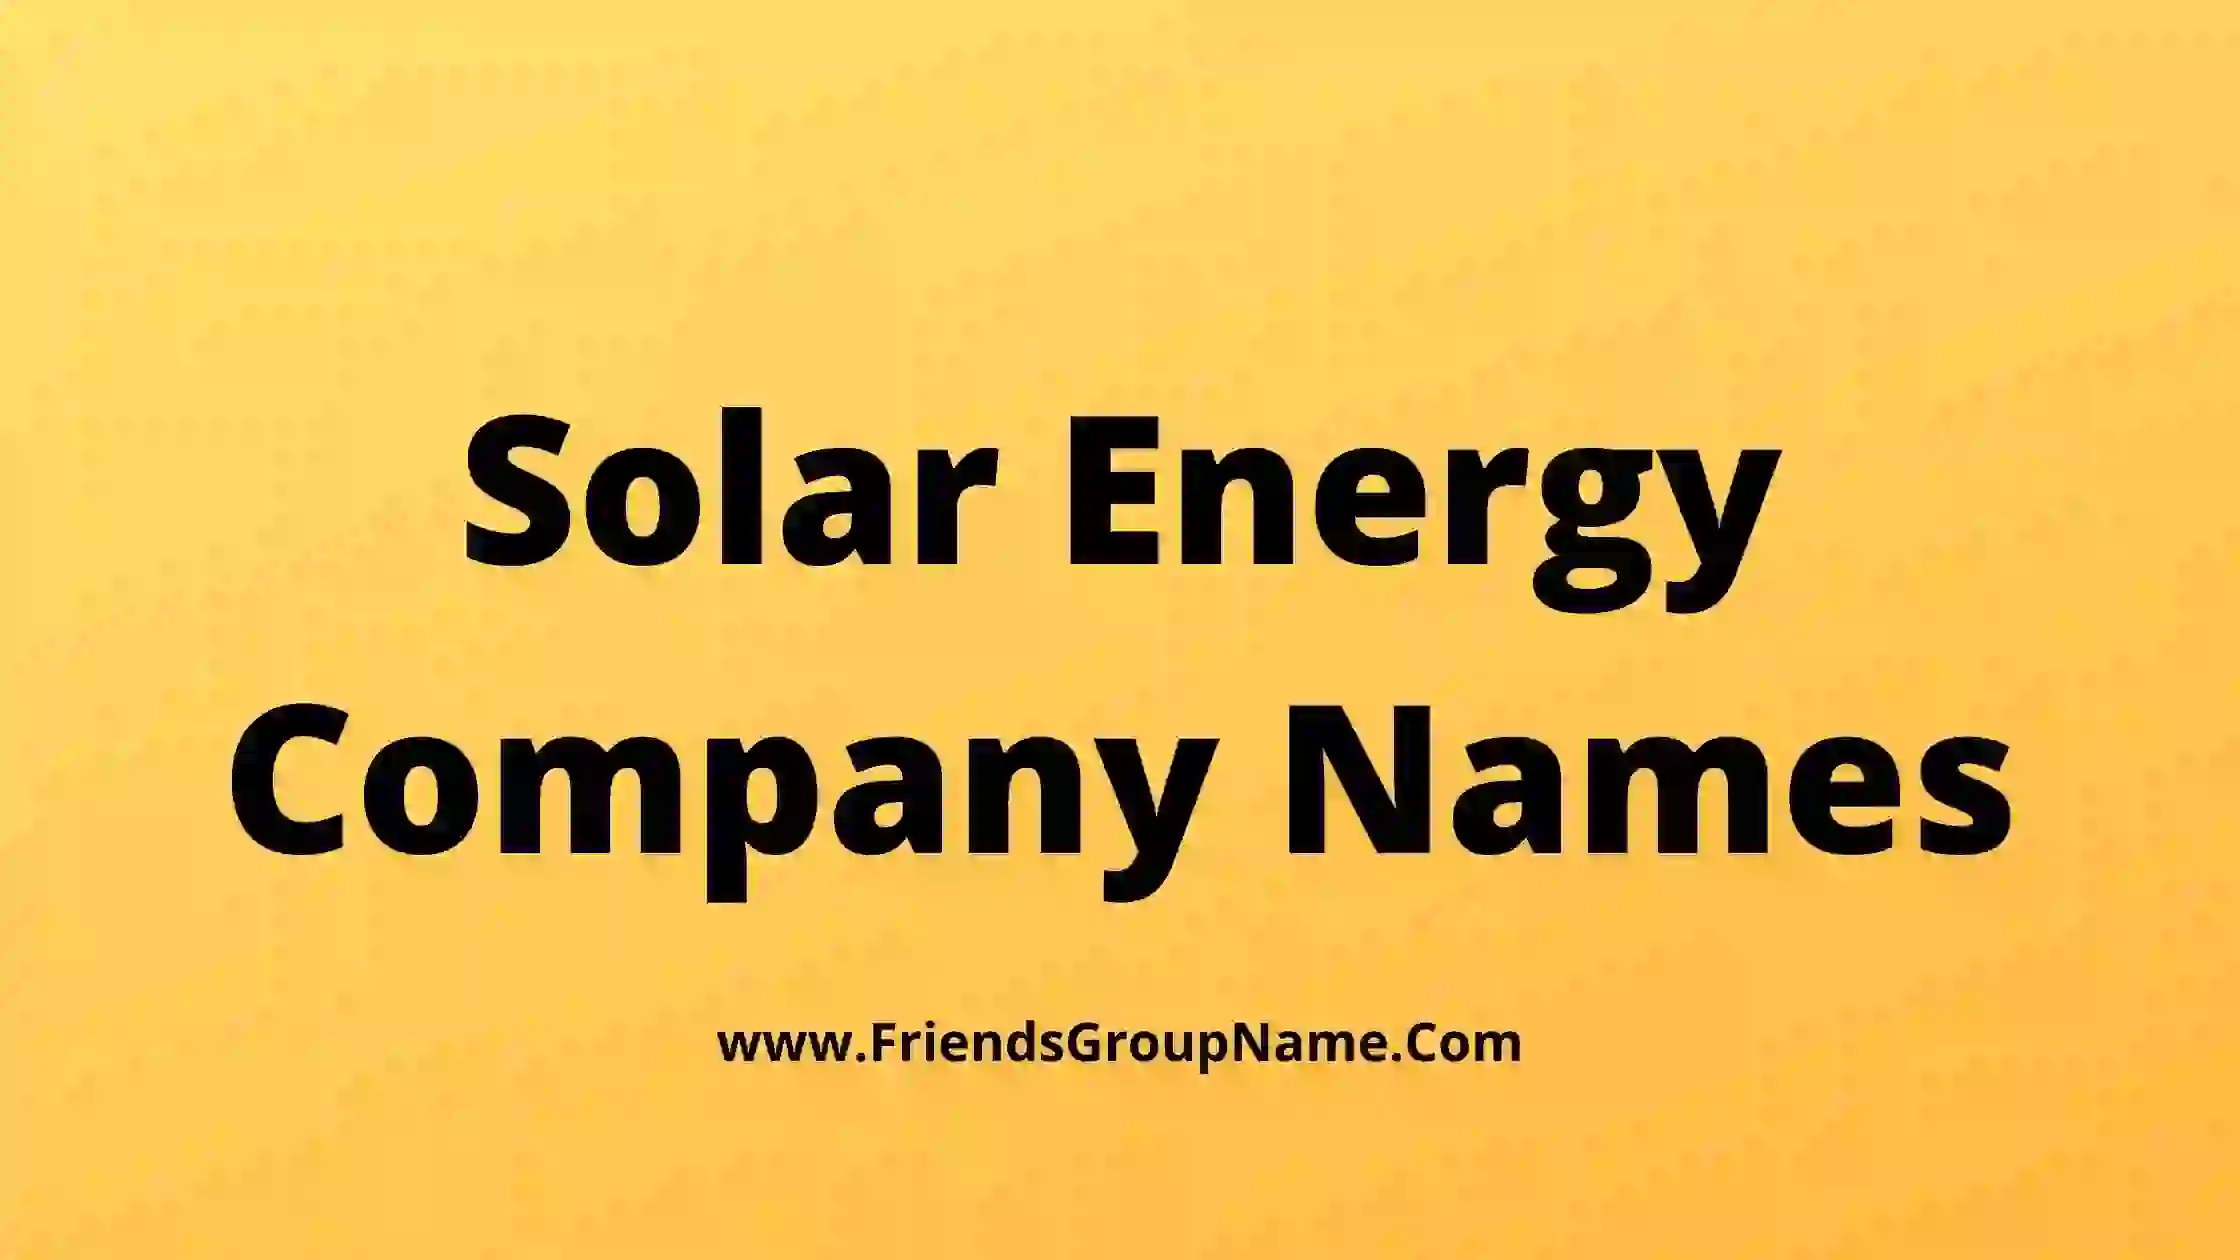 Solar Energy Company Names